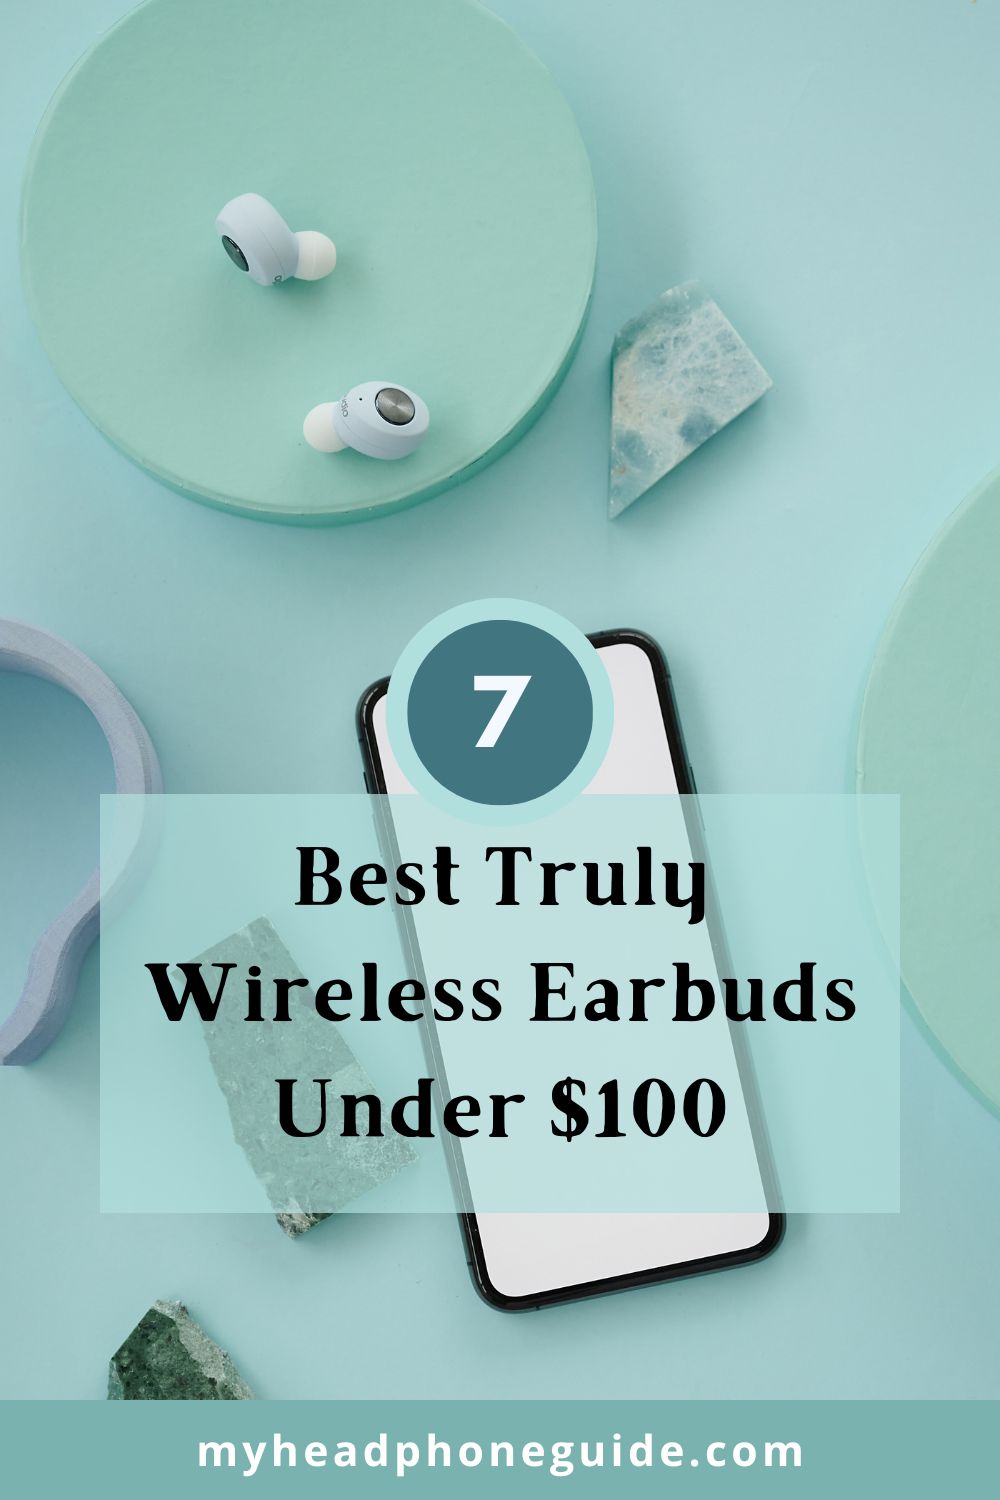 7 Best Truly Wireless Earbuds Under $100